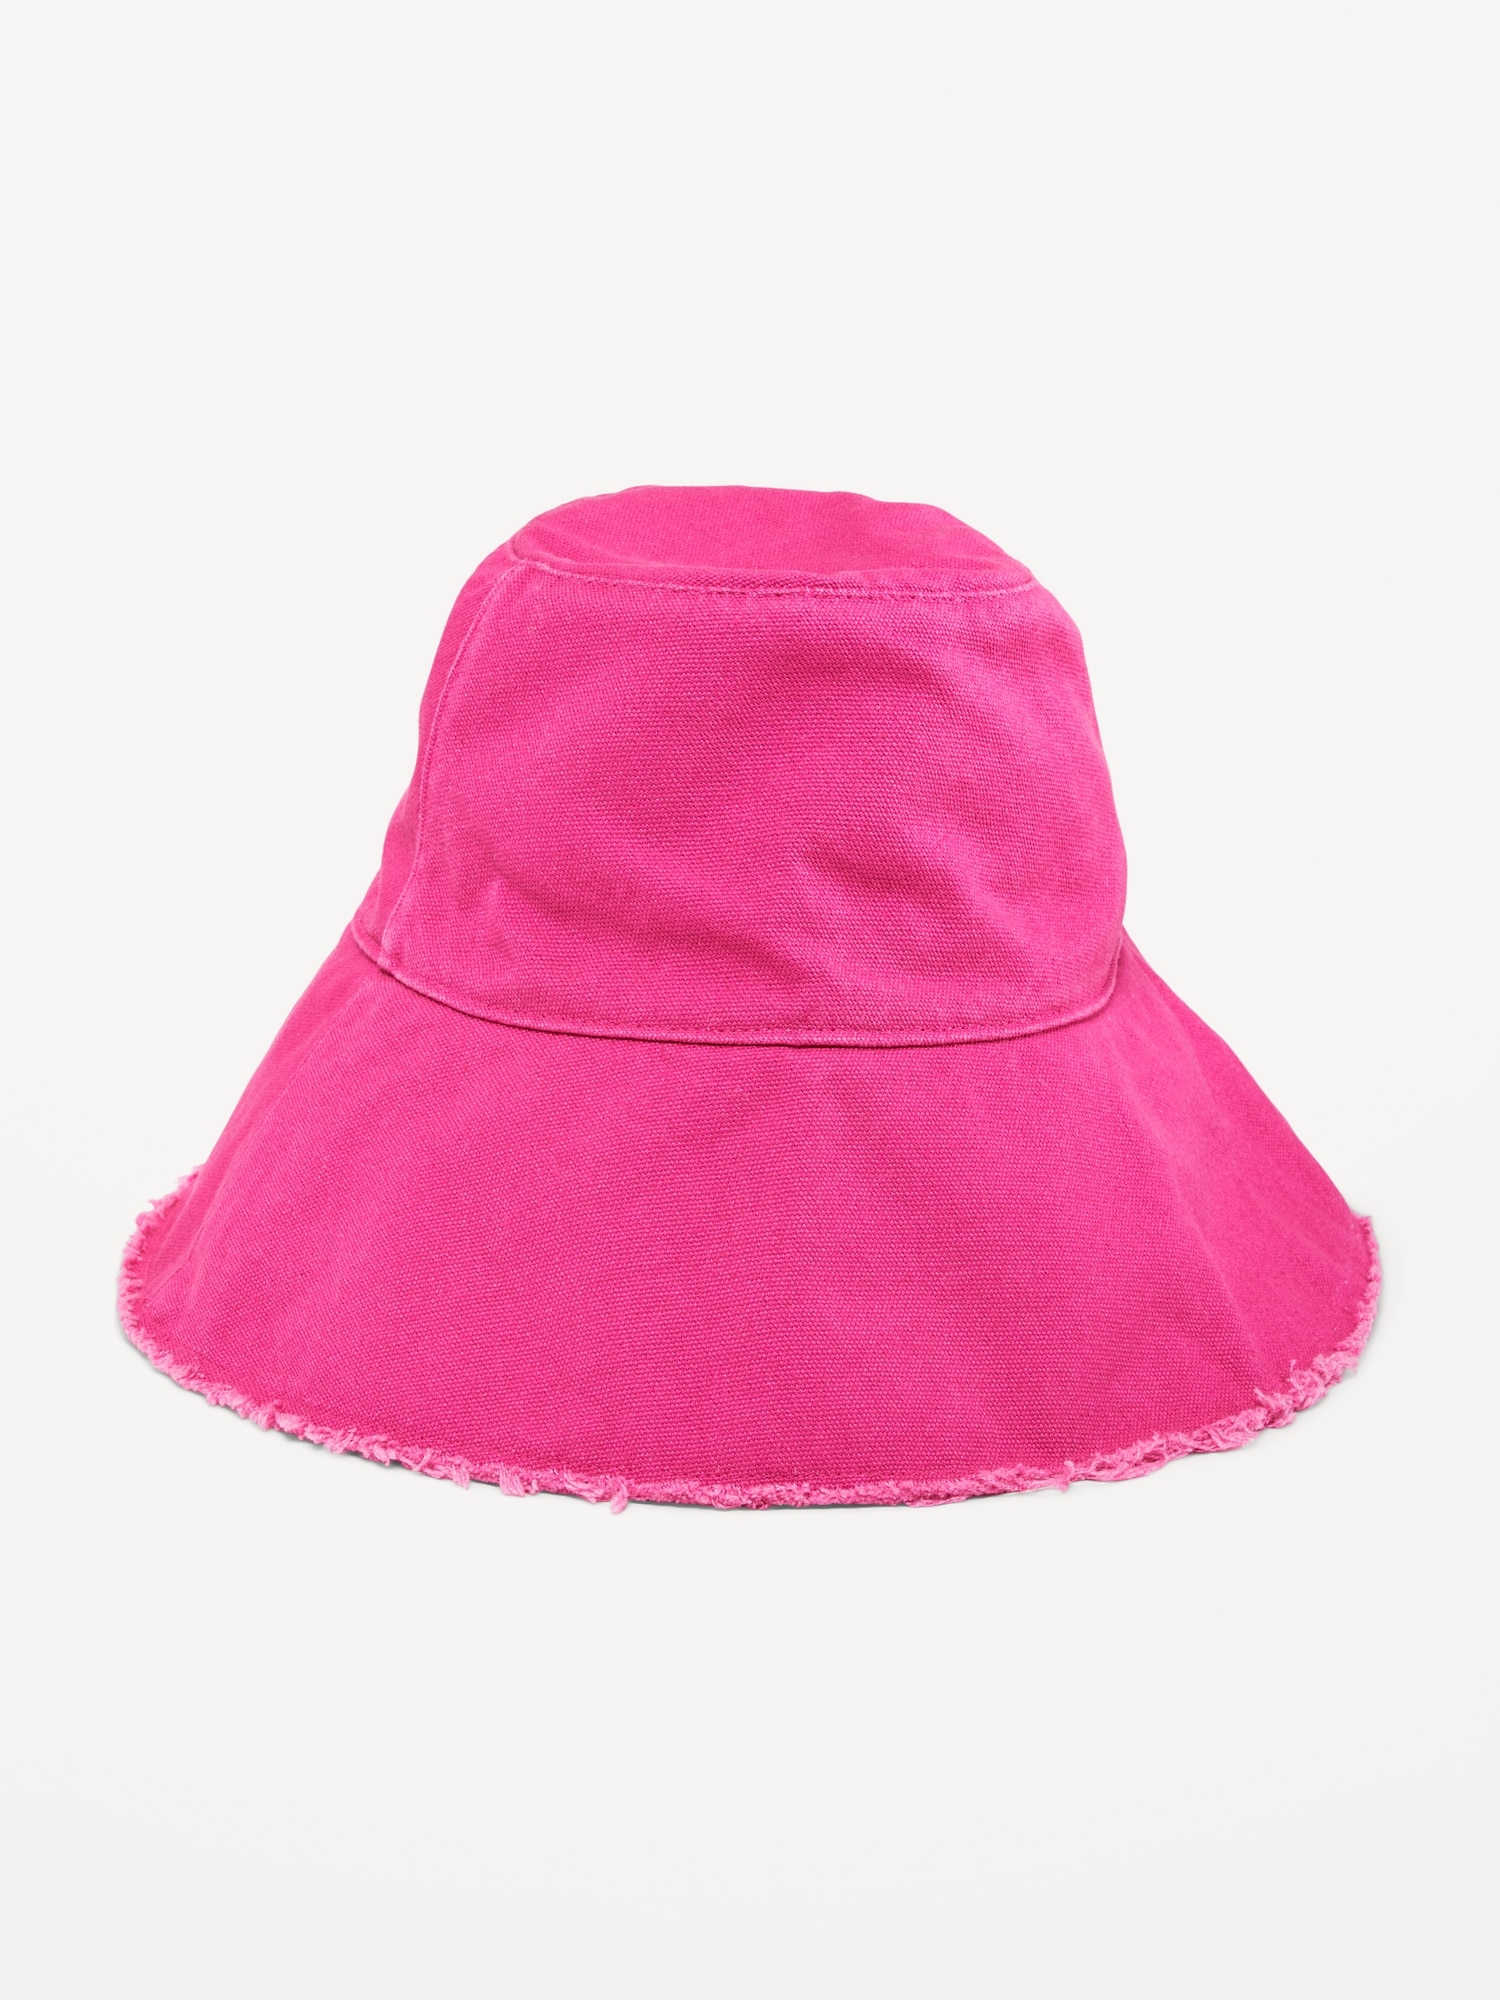 NEW RAG & BONE Cotton Bucket Hat Light Pink Women's $140